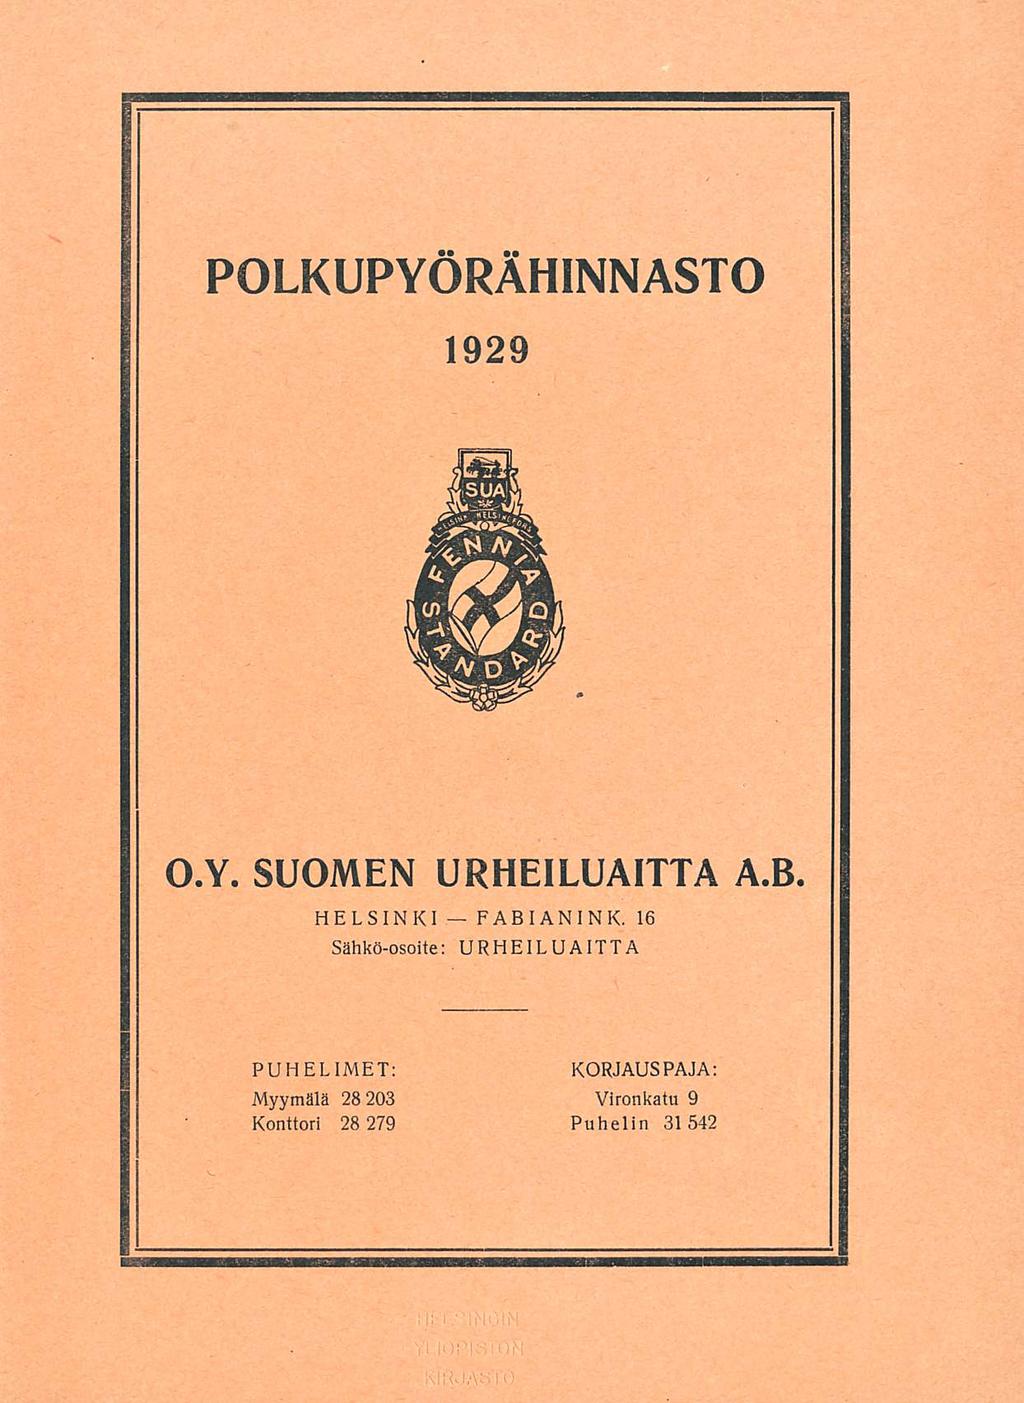 POLKUPYÖRÄHINNASTO1929. 1929 O.Y. SUOMEN URHEILUAITTA A.B. HELSINKI F A BIA NIN K.